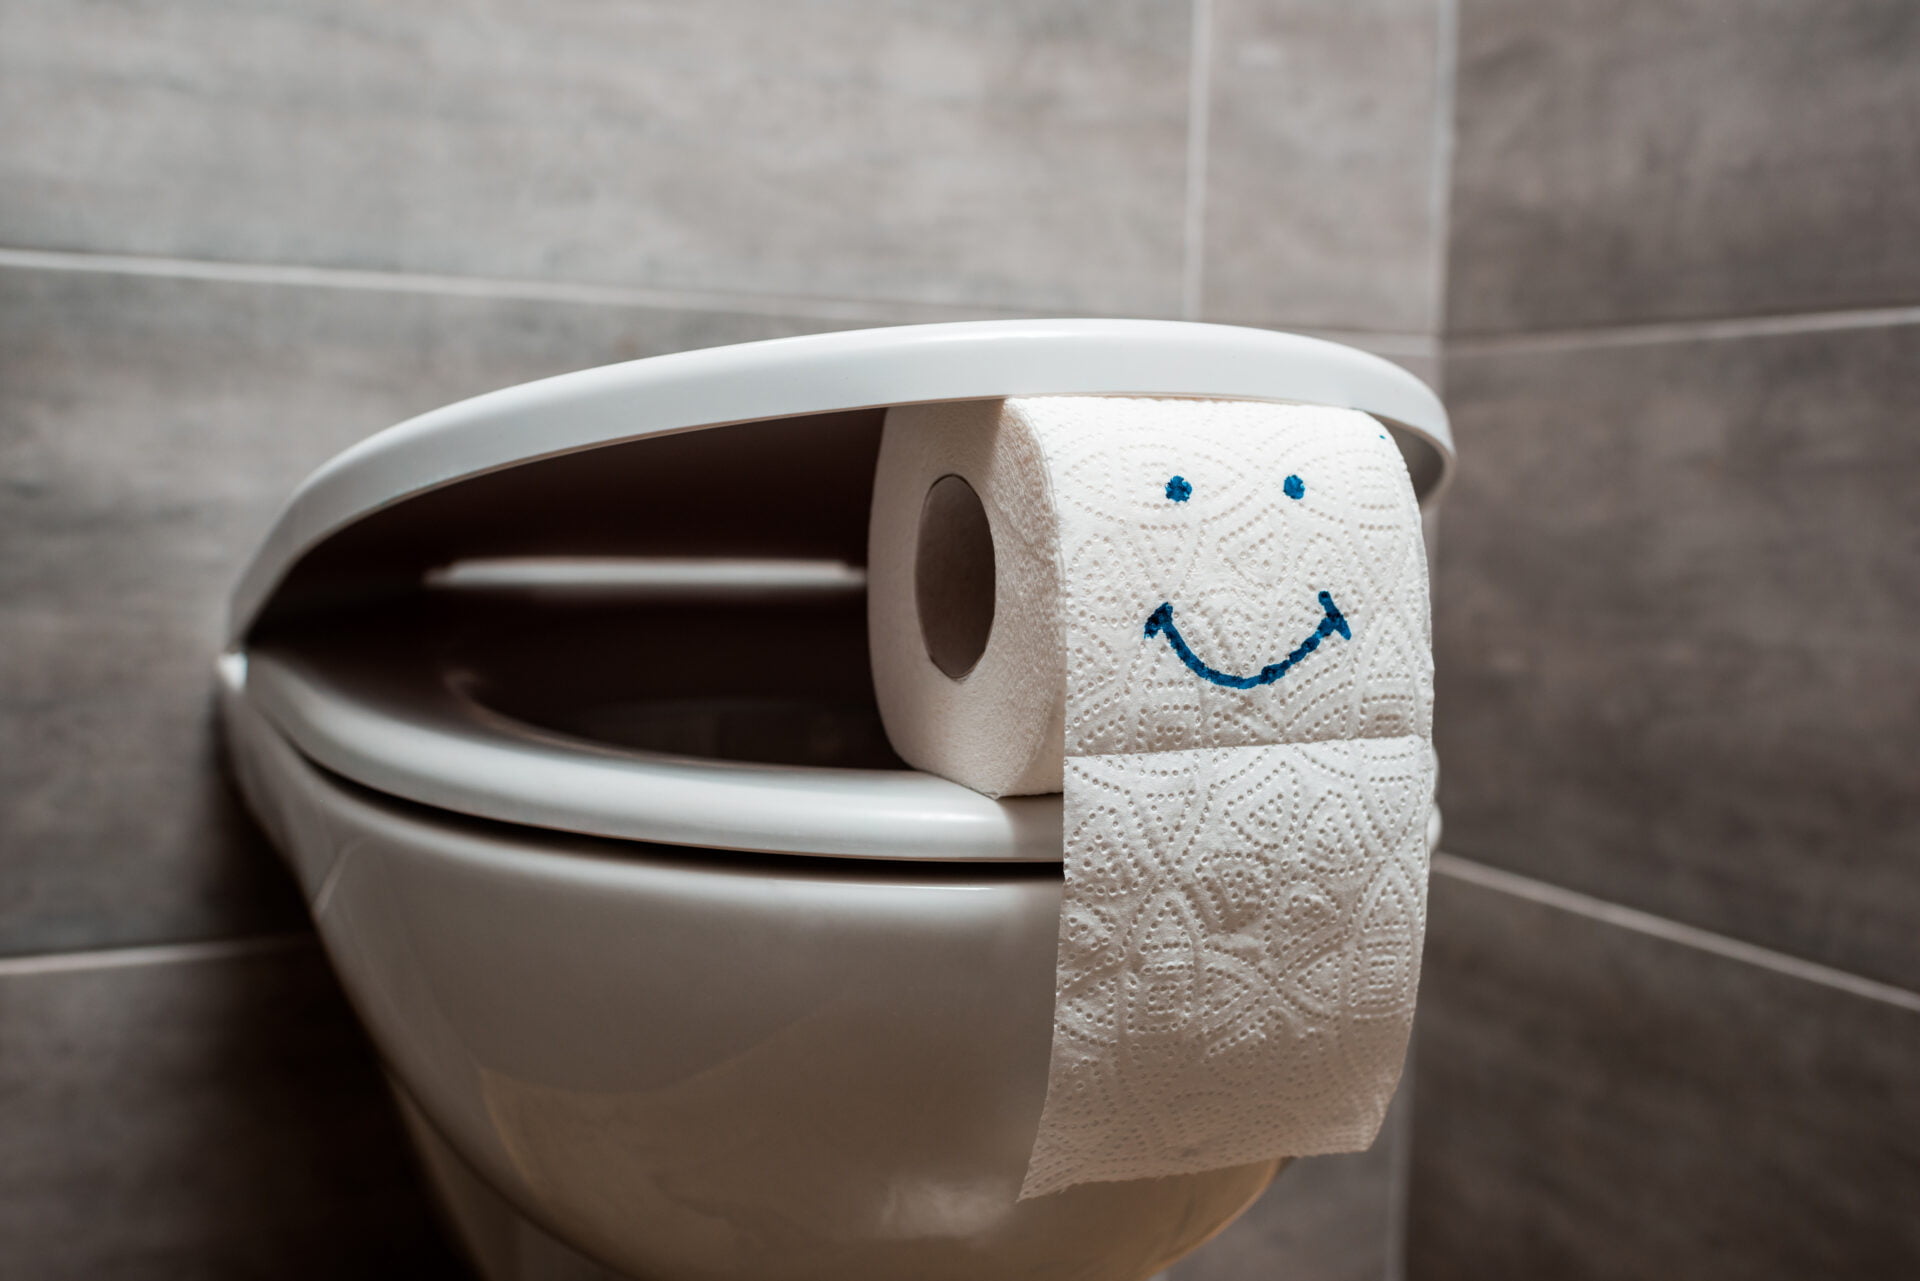 Toilet paper smiling over toilet